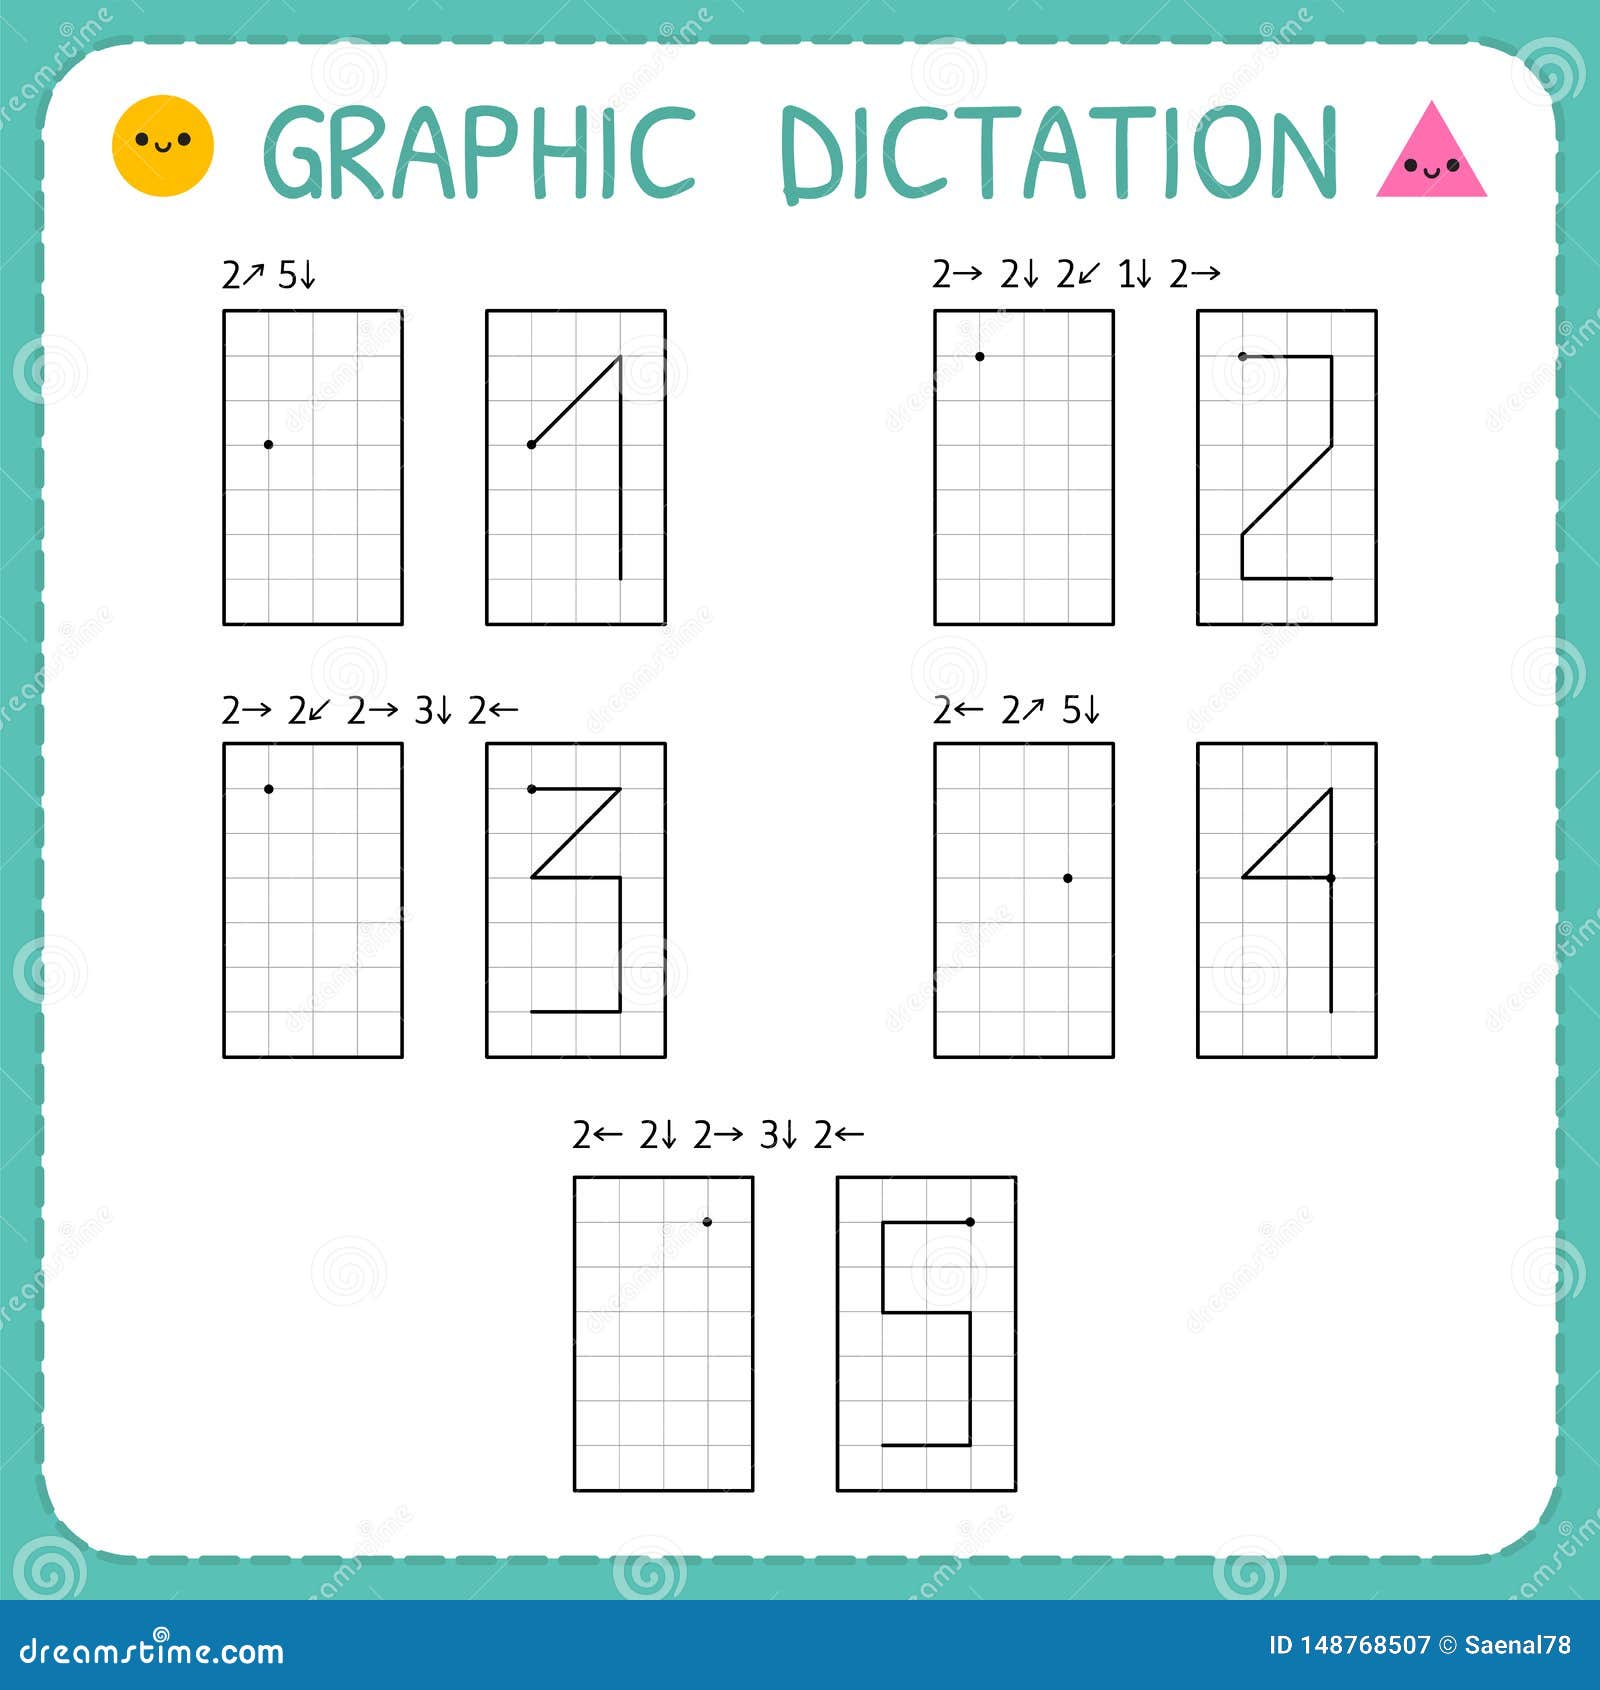 graphic-dictation-numbers-1-5-kindergarten-educational-game-for-kids-preschool-worksheet-for